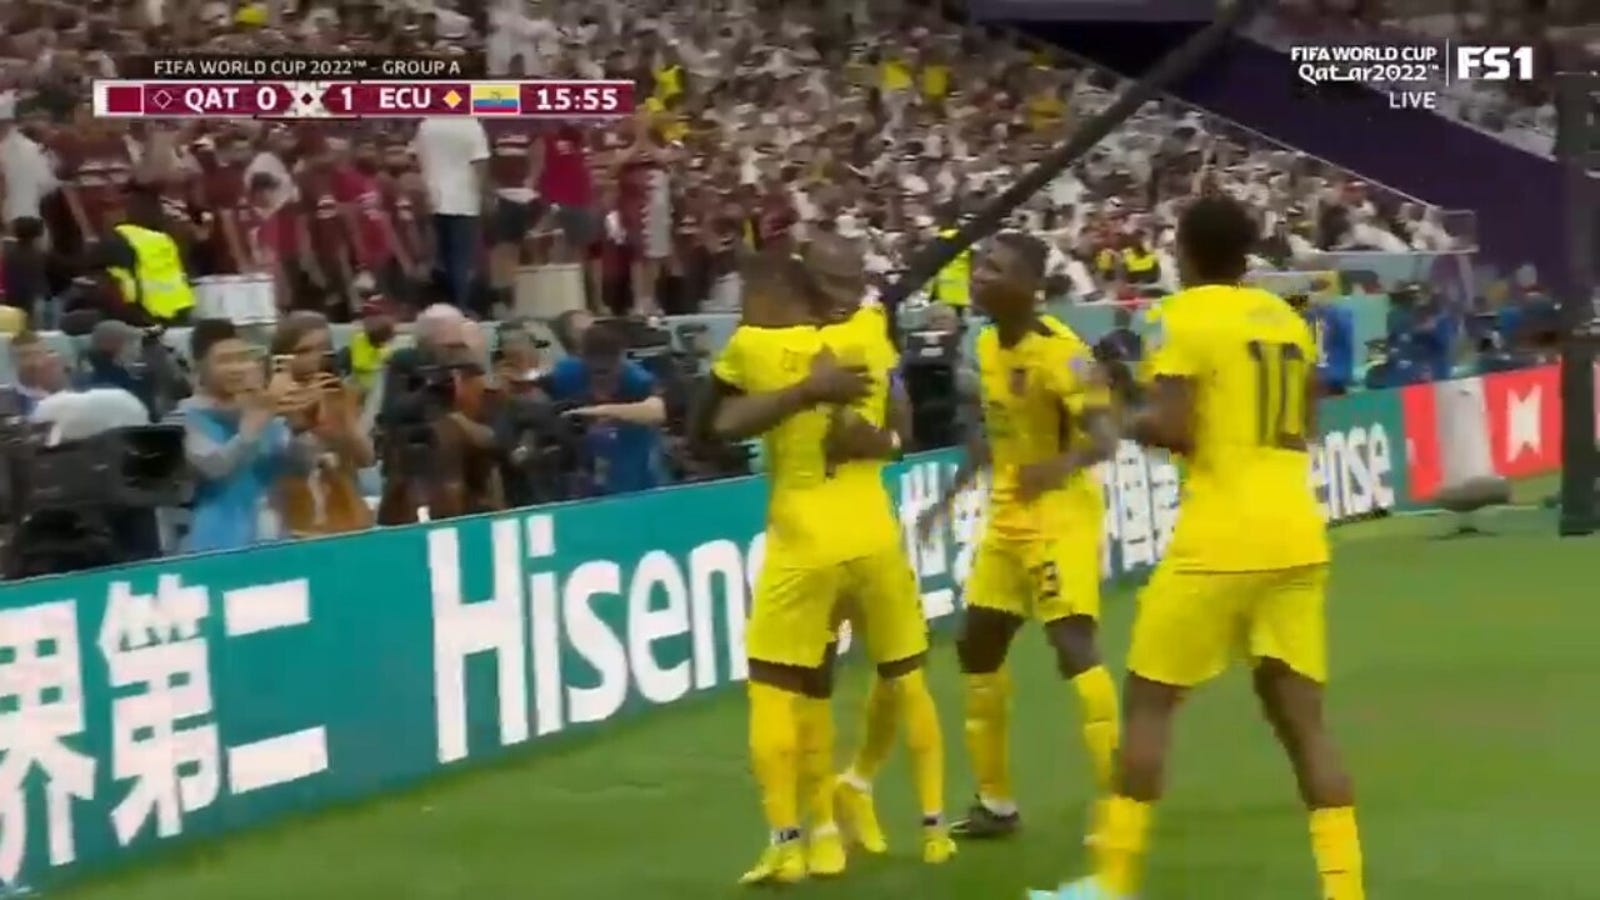 Ecuador's Ener Valencia fouls in the penalty area and scores a kill goal against Qatar 